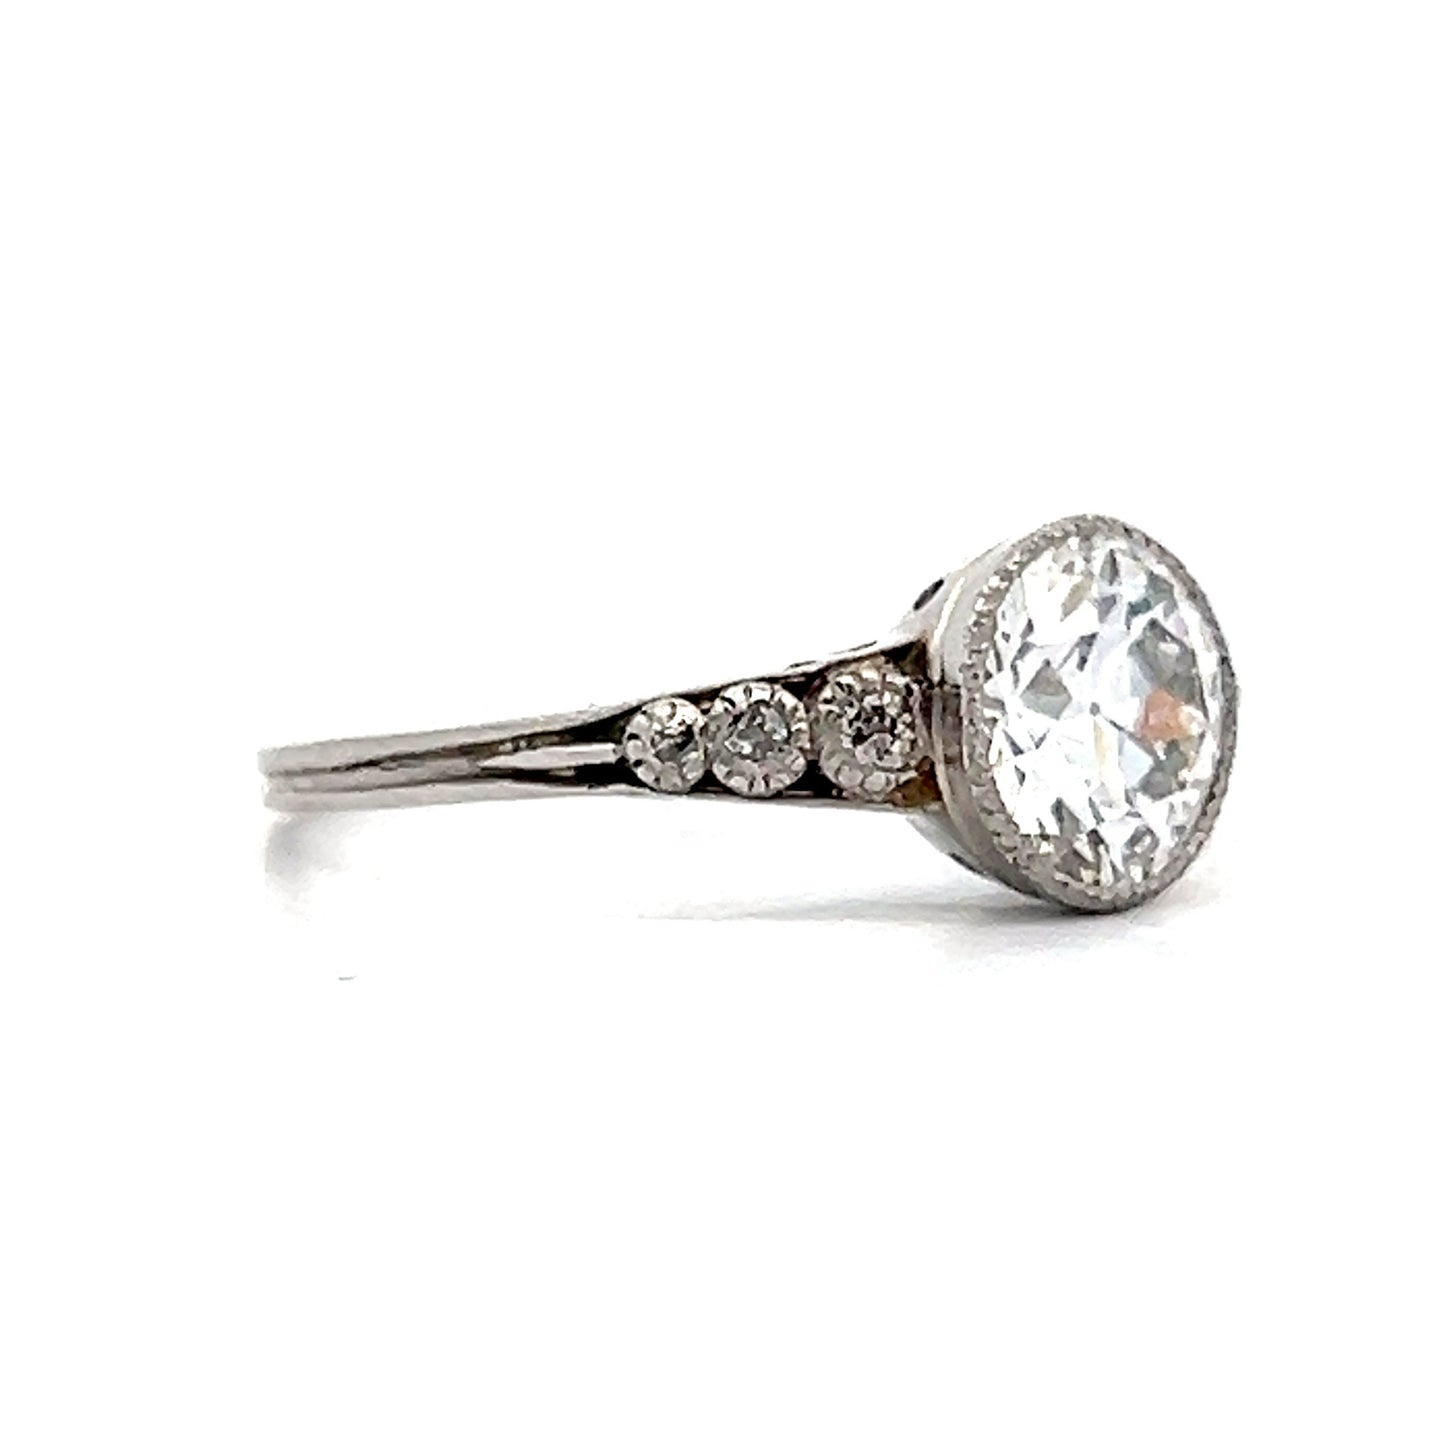 1.64 Vintage Art Deco Bezel Engagement Ring in Platinum